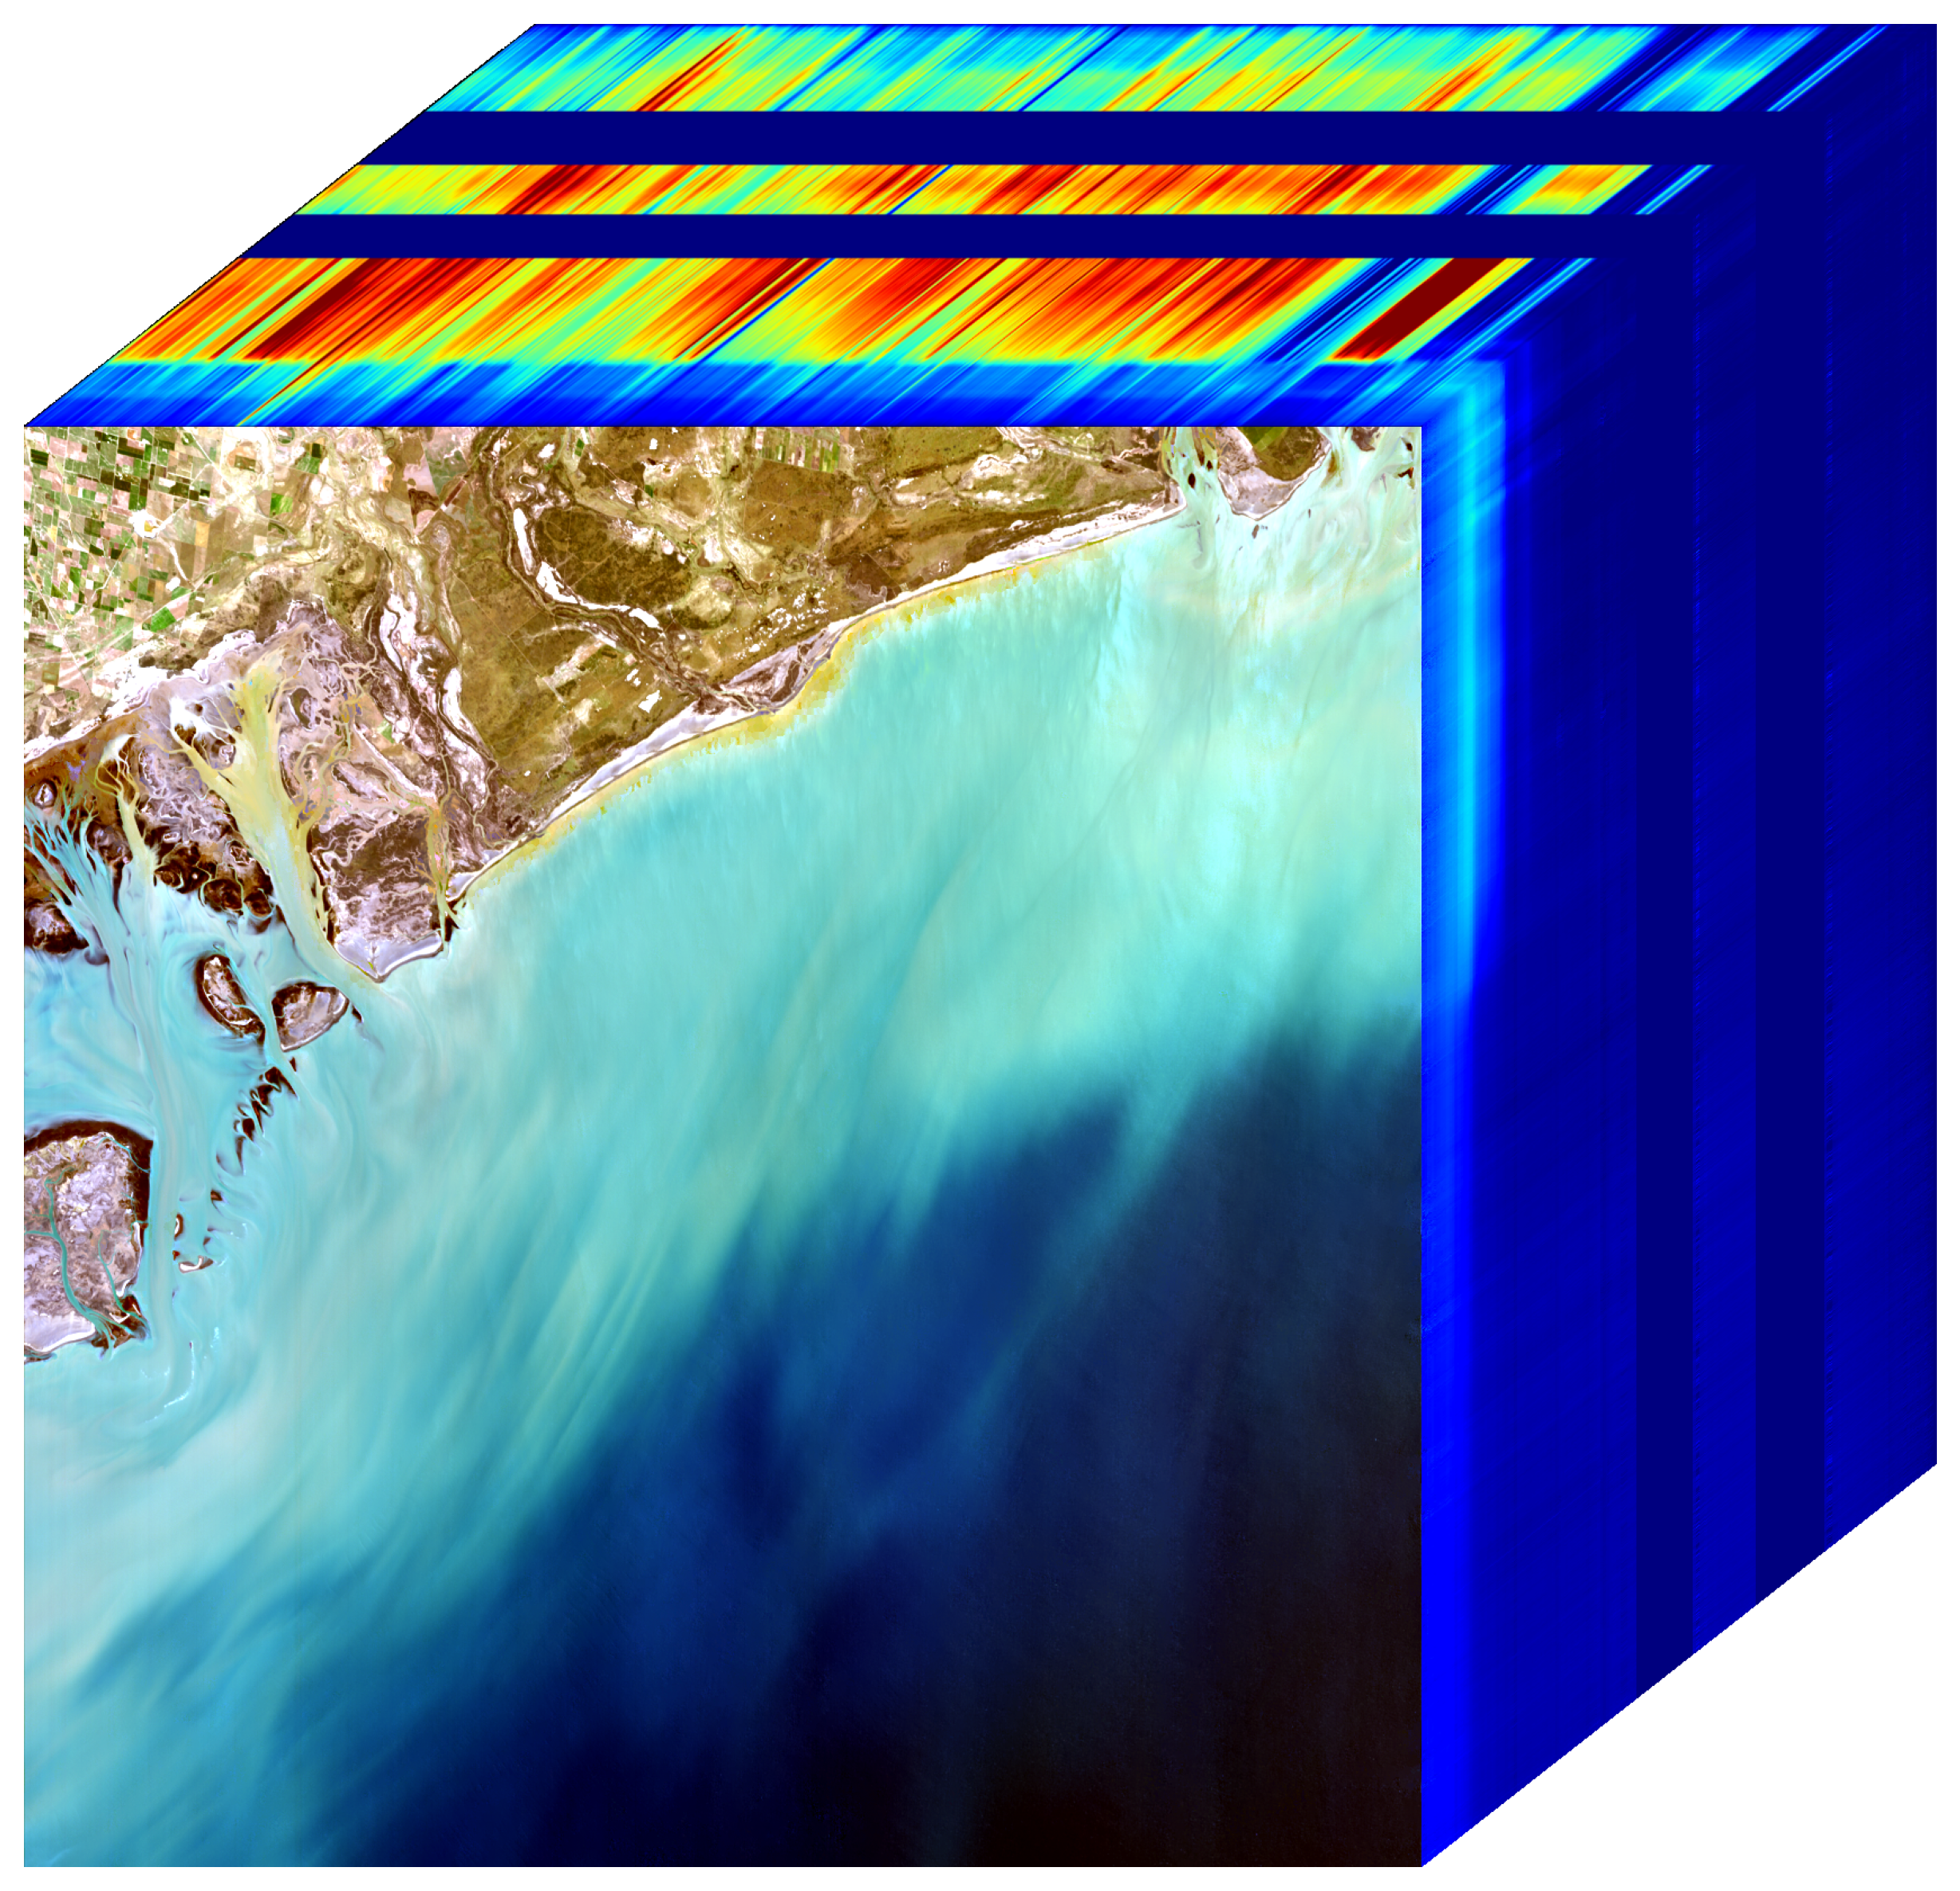 An EMIT data cube of coastal data in Argentina